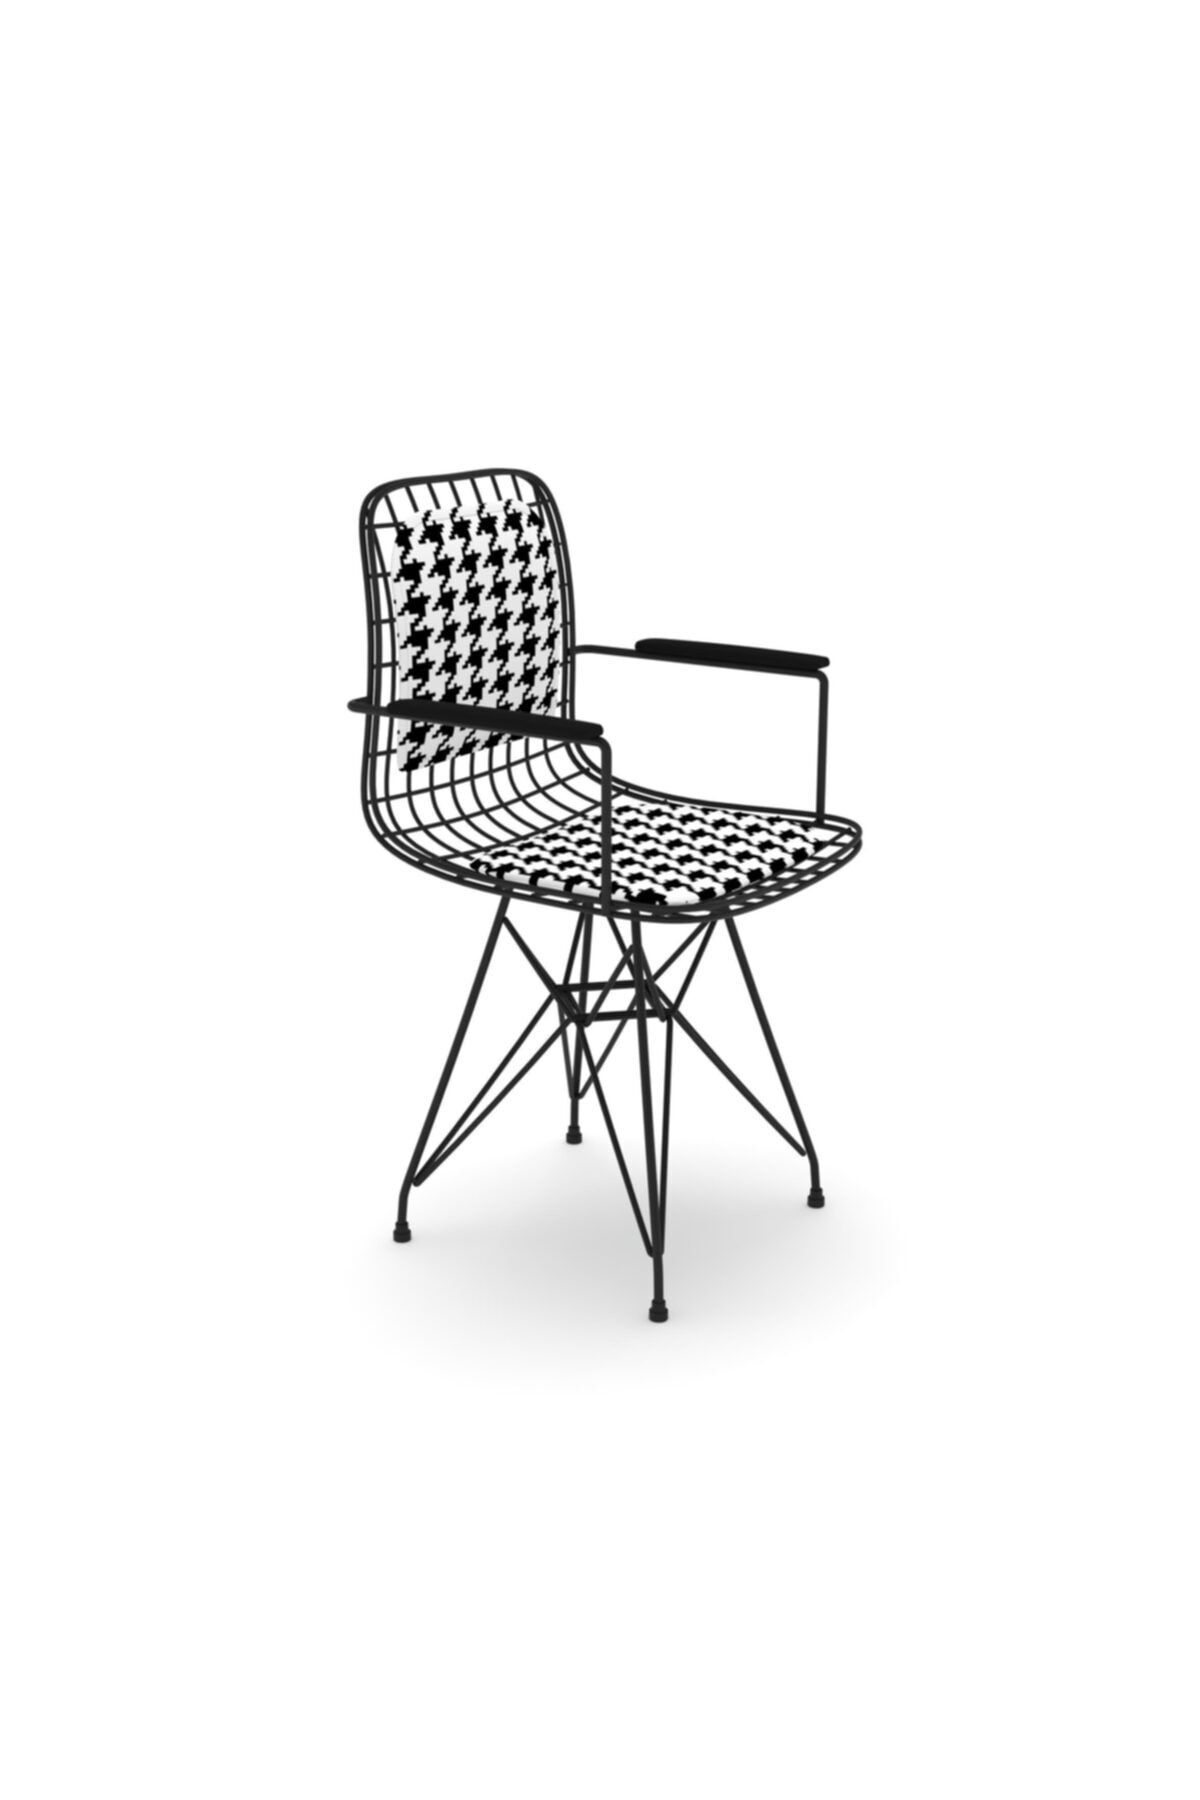 Kenzlife Knsz kafes tel sandalyesi 1 li mazlum syhkono kolçaklı sırt minderli ofis cafe bahçe mutfak